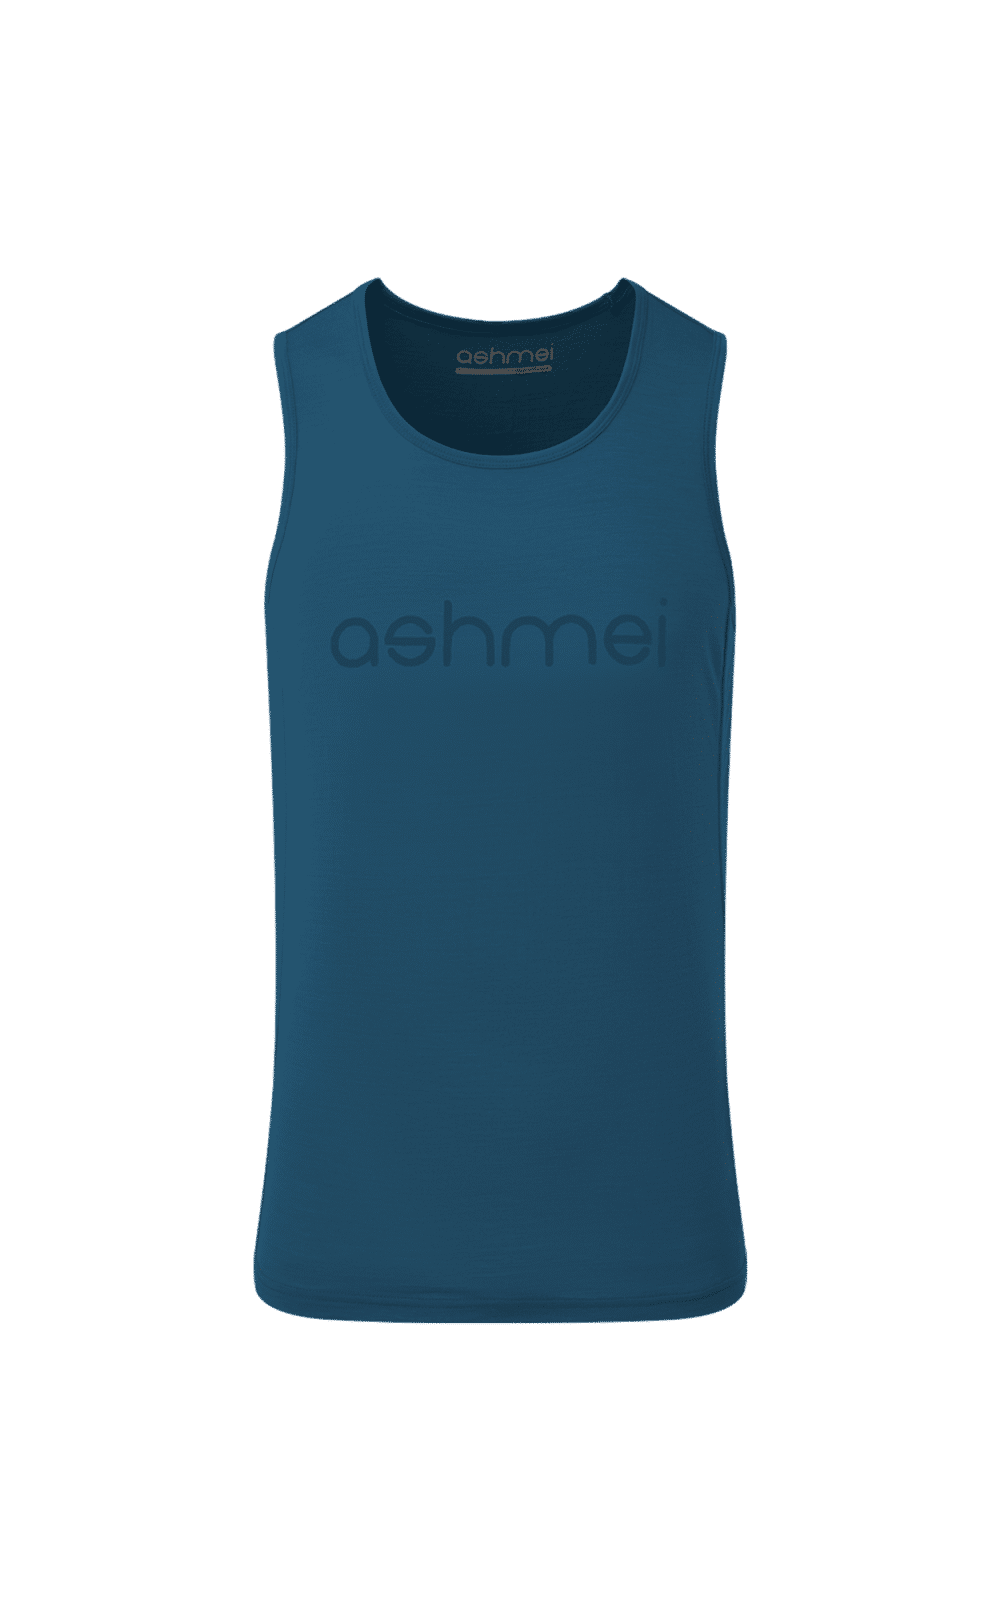 ashmei Classic Run Vest